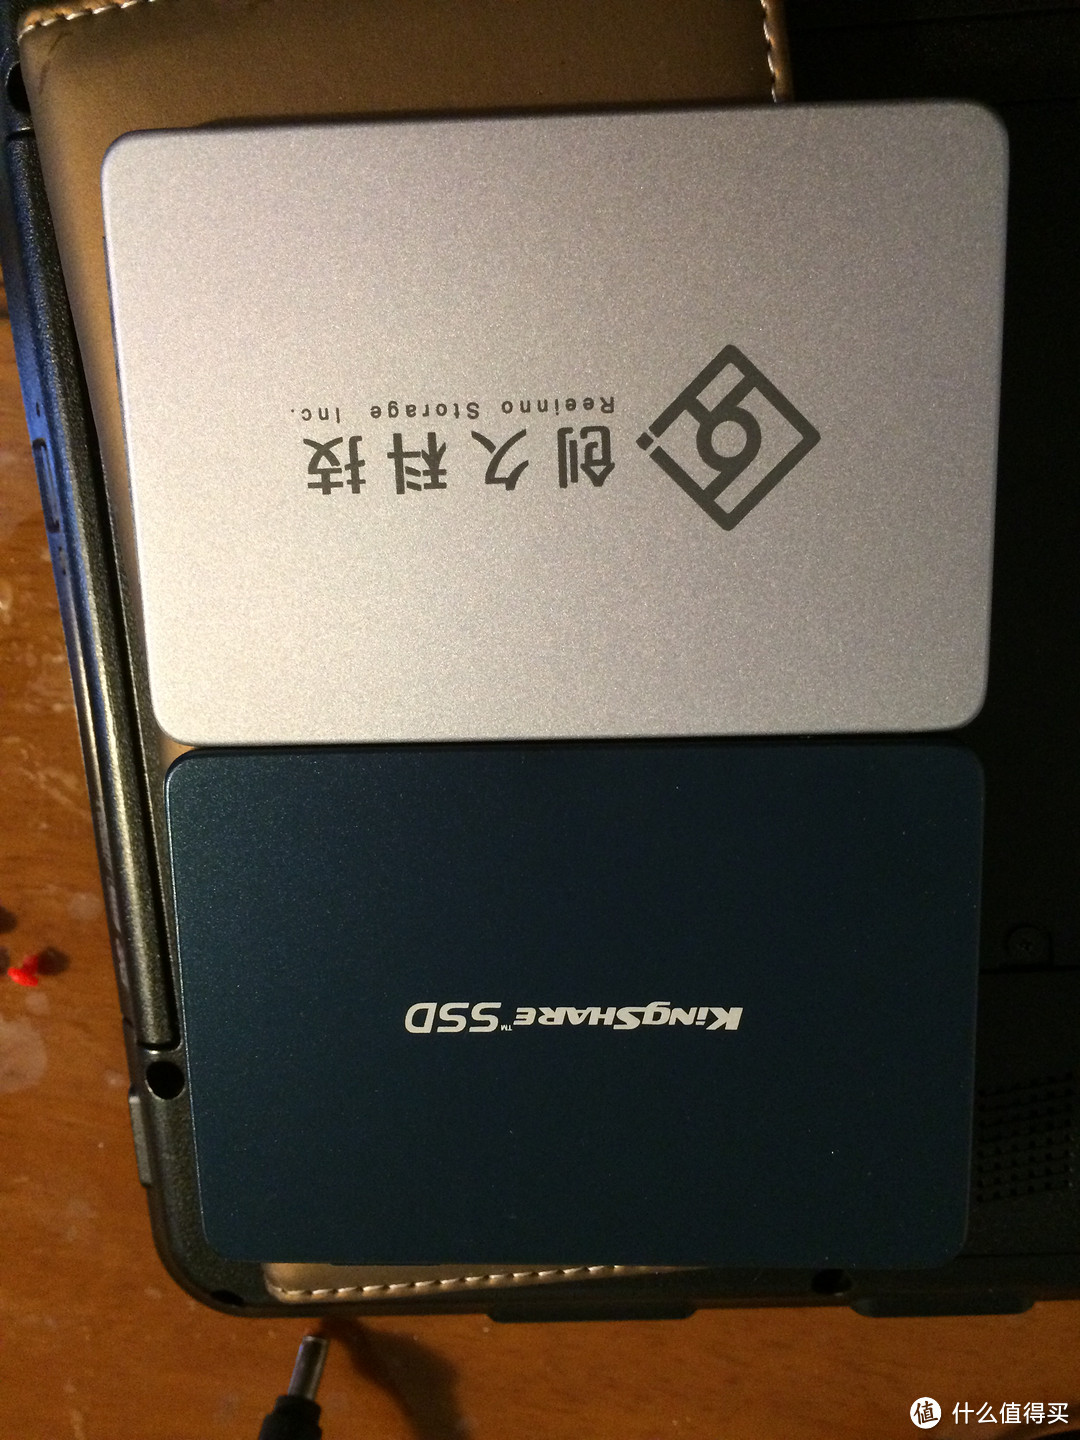 Reeinno 创久 天璇 128G SSD 固态硬盘 开箱小评